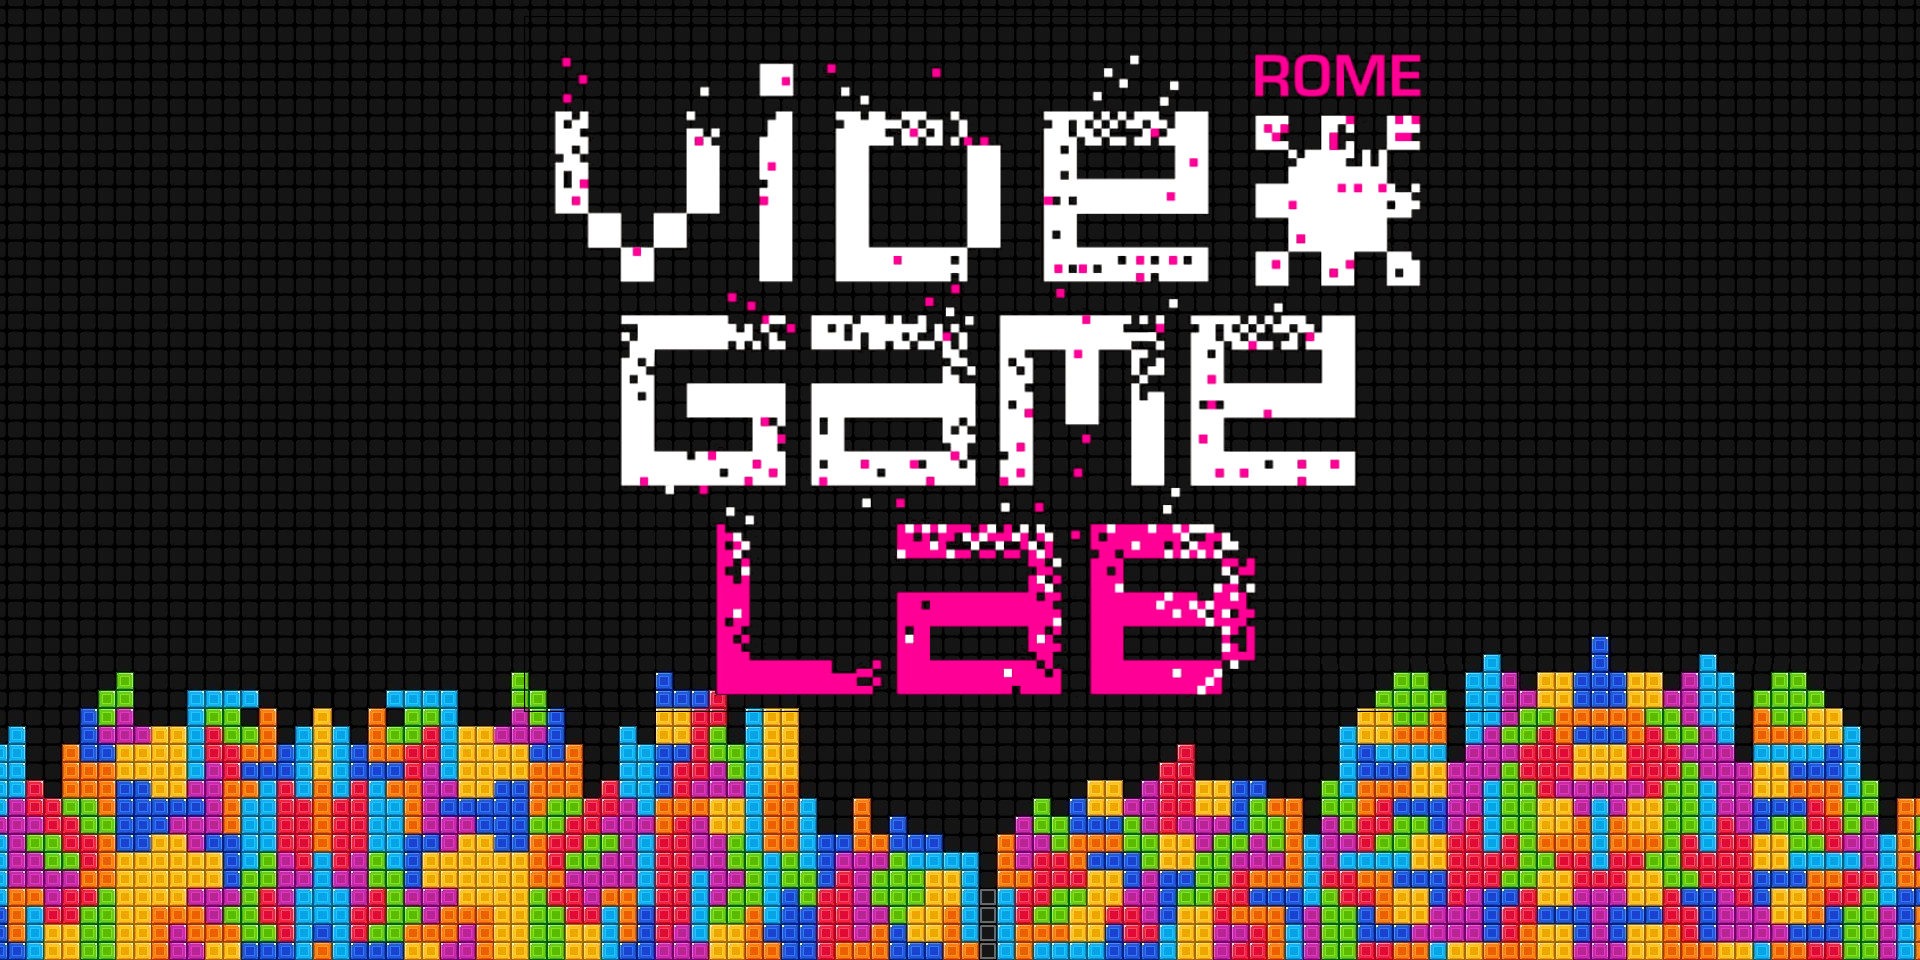 Rome Videogame Lab